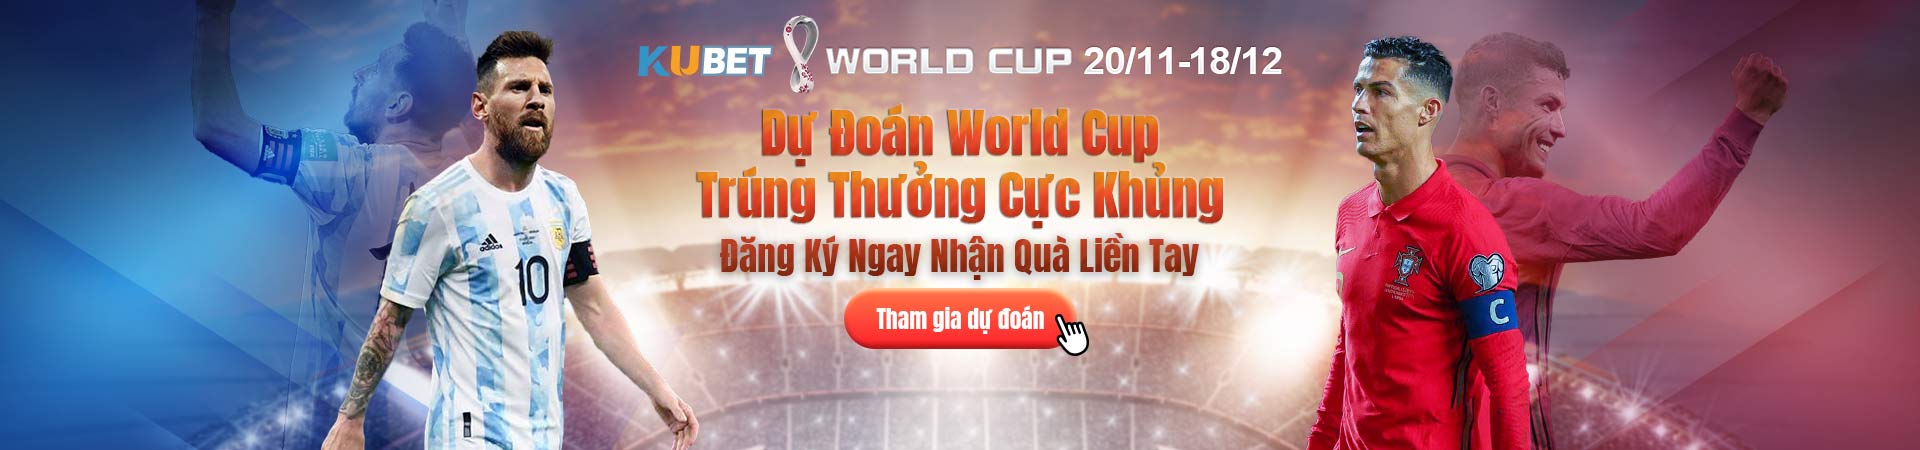 kubet-world-cup